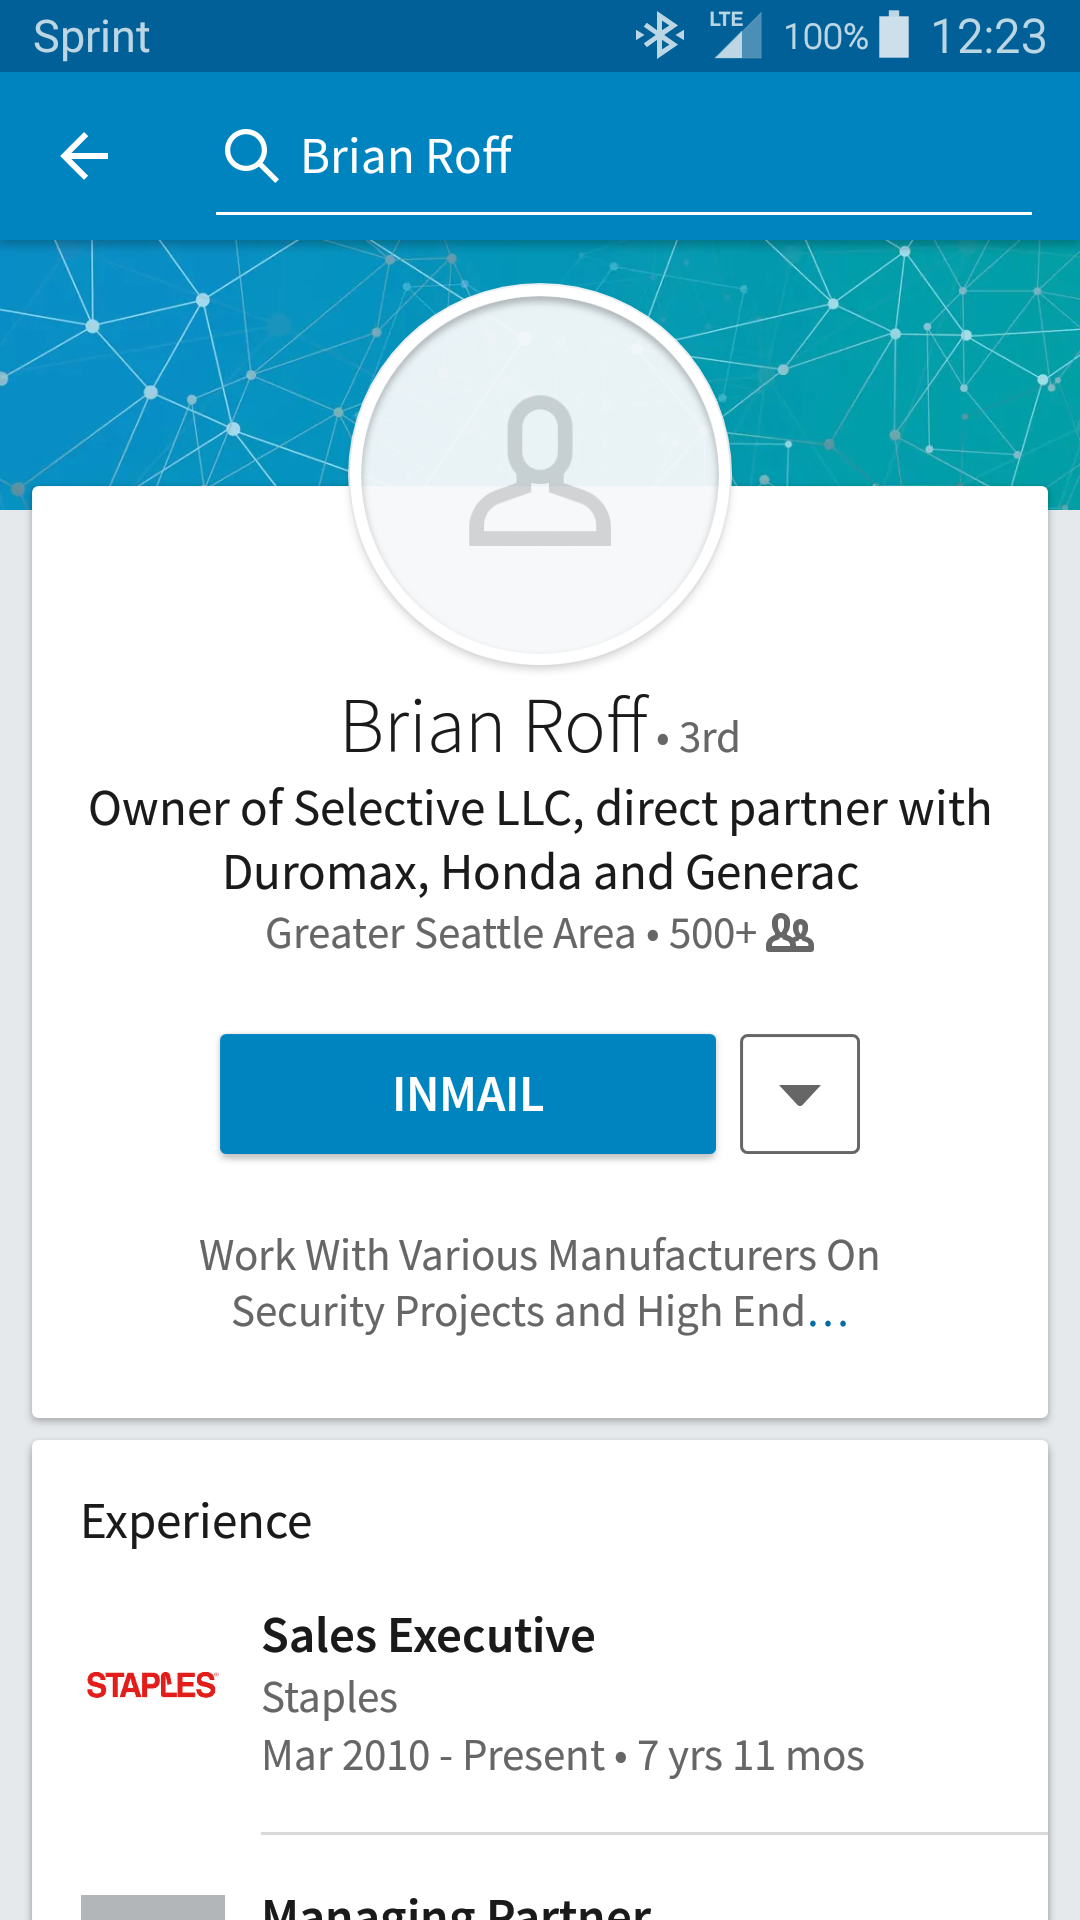 Mr. Roff's LinkedIn profile